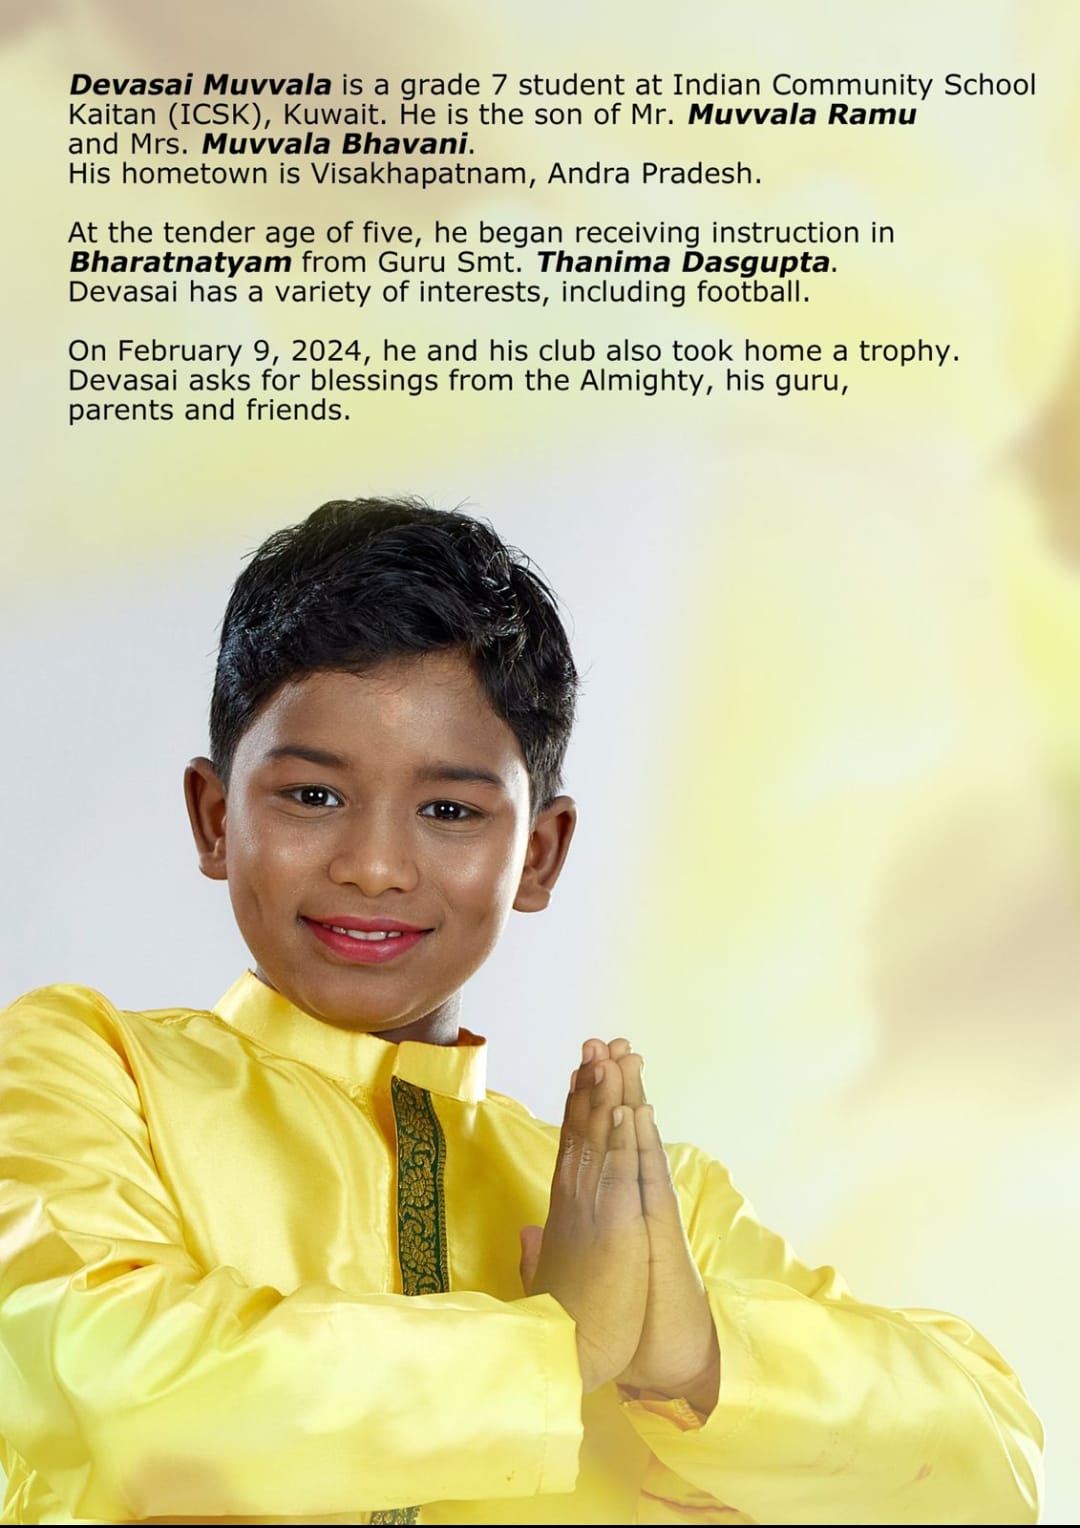 Invitation for *BHARATHANAATYAM DANCE Arangatam PROGRAM* free entry come watch and bless them